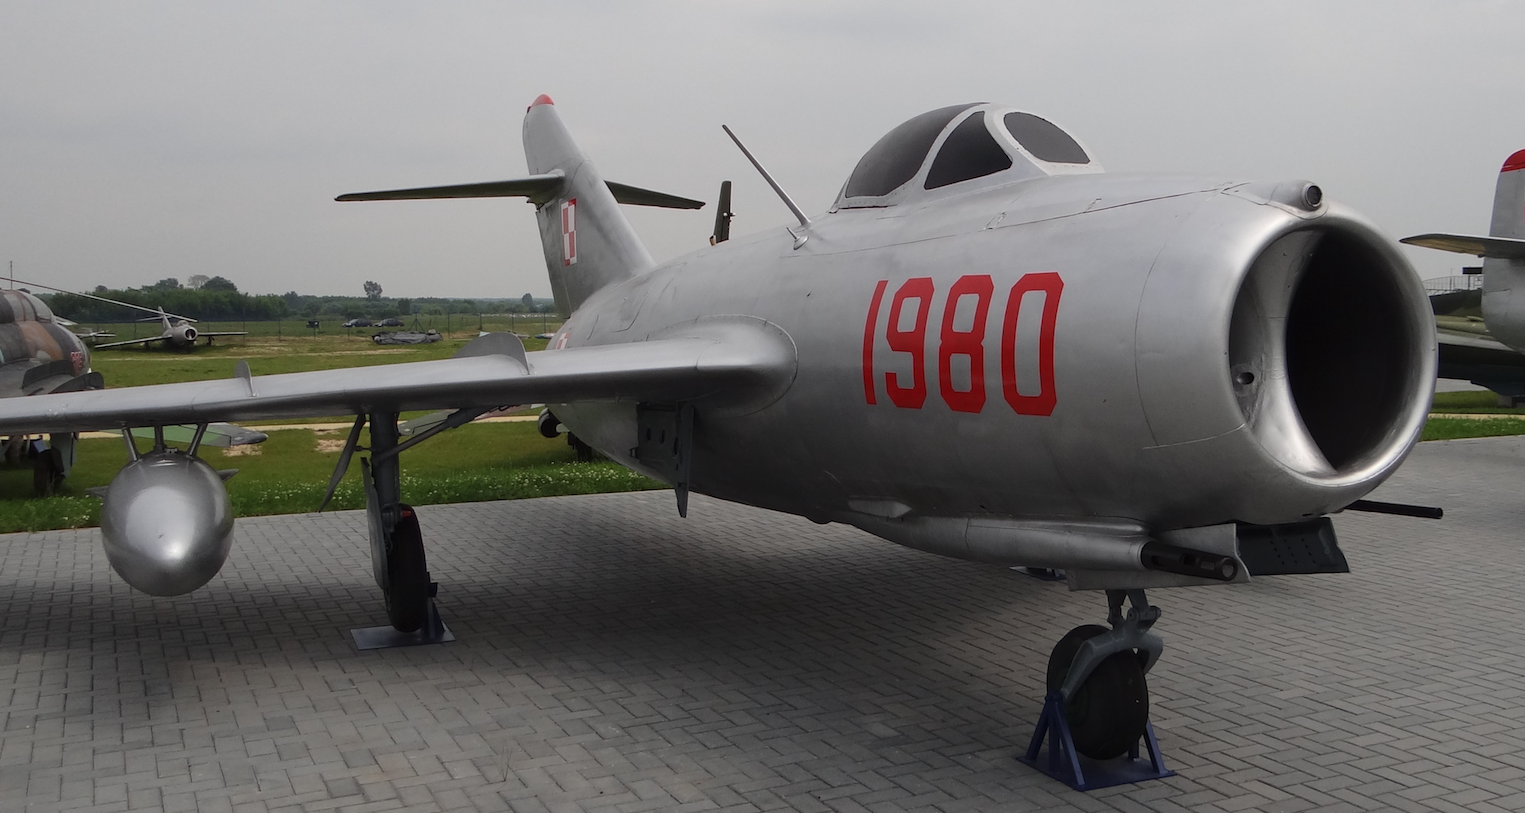 MiG-15 bis nb 1980. 2012 rok. Zdjęcie Karol Placha Hetman